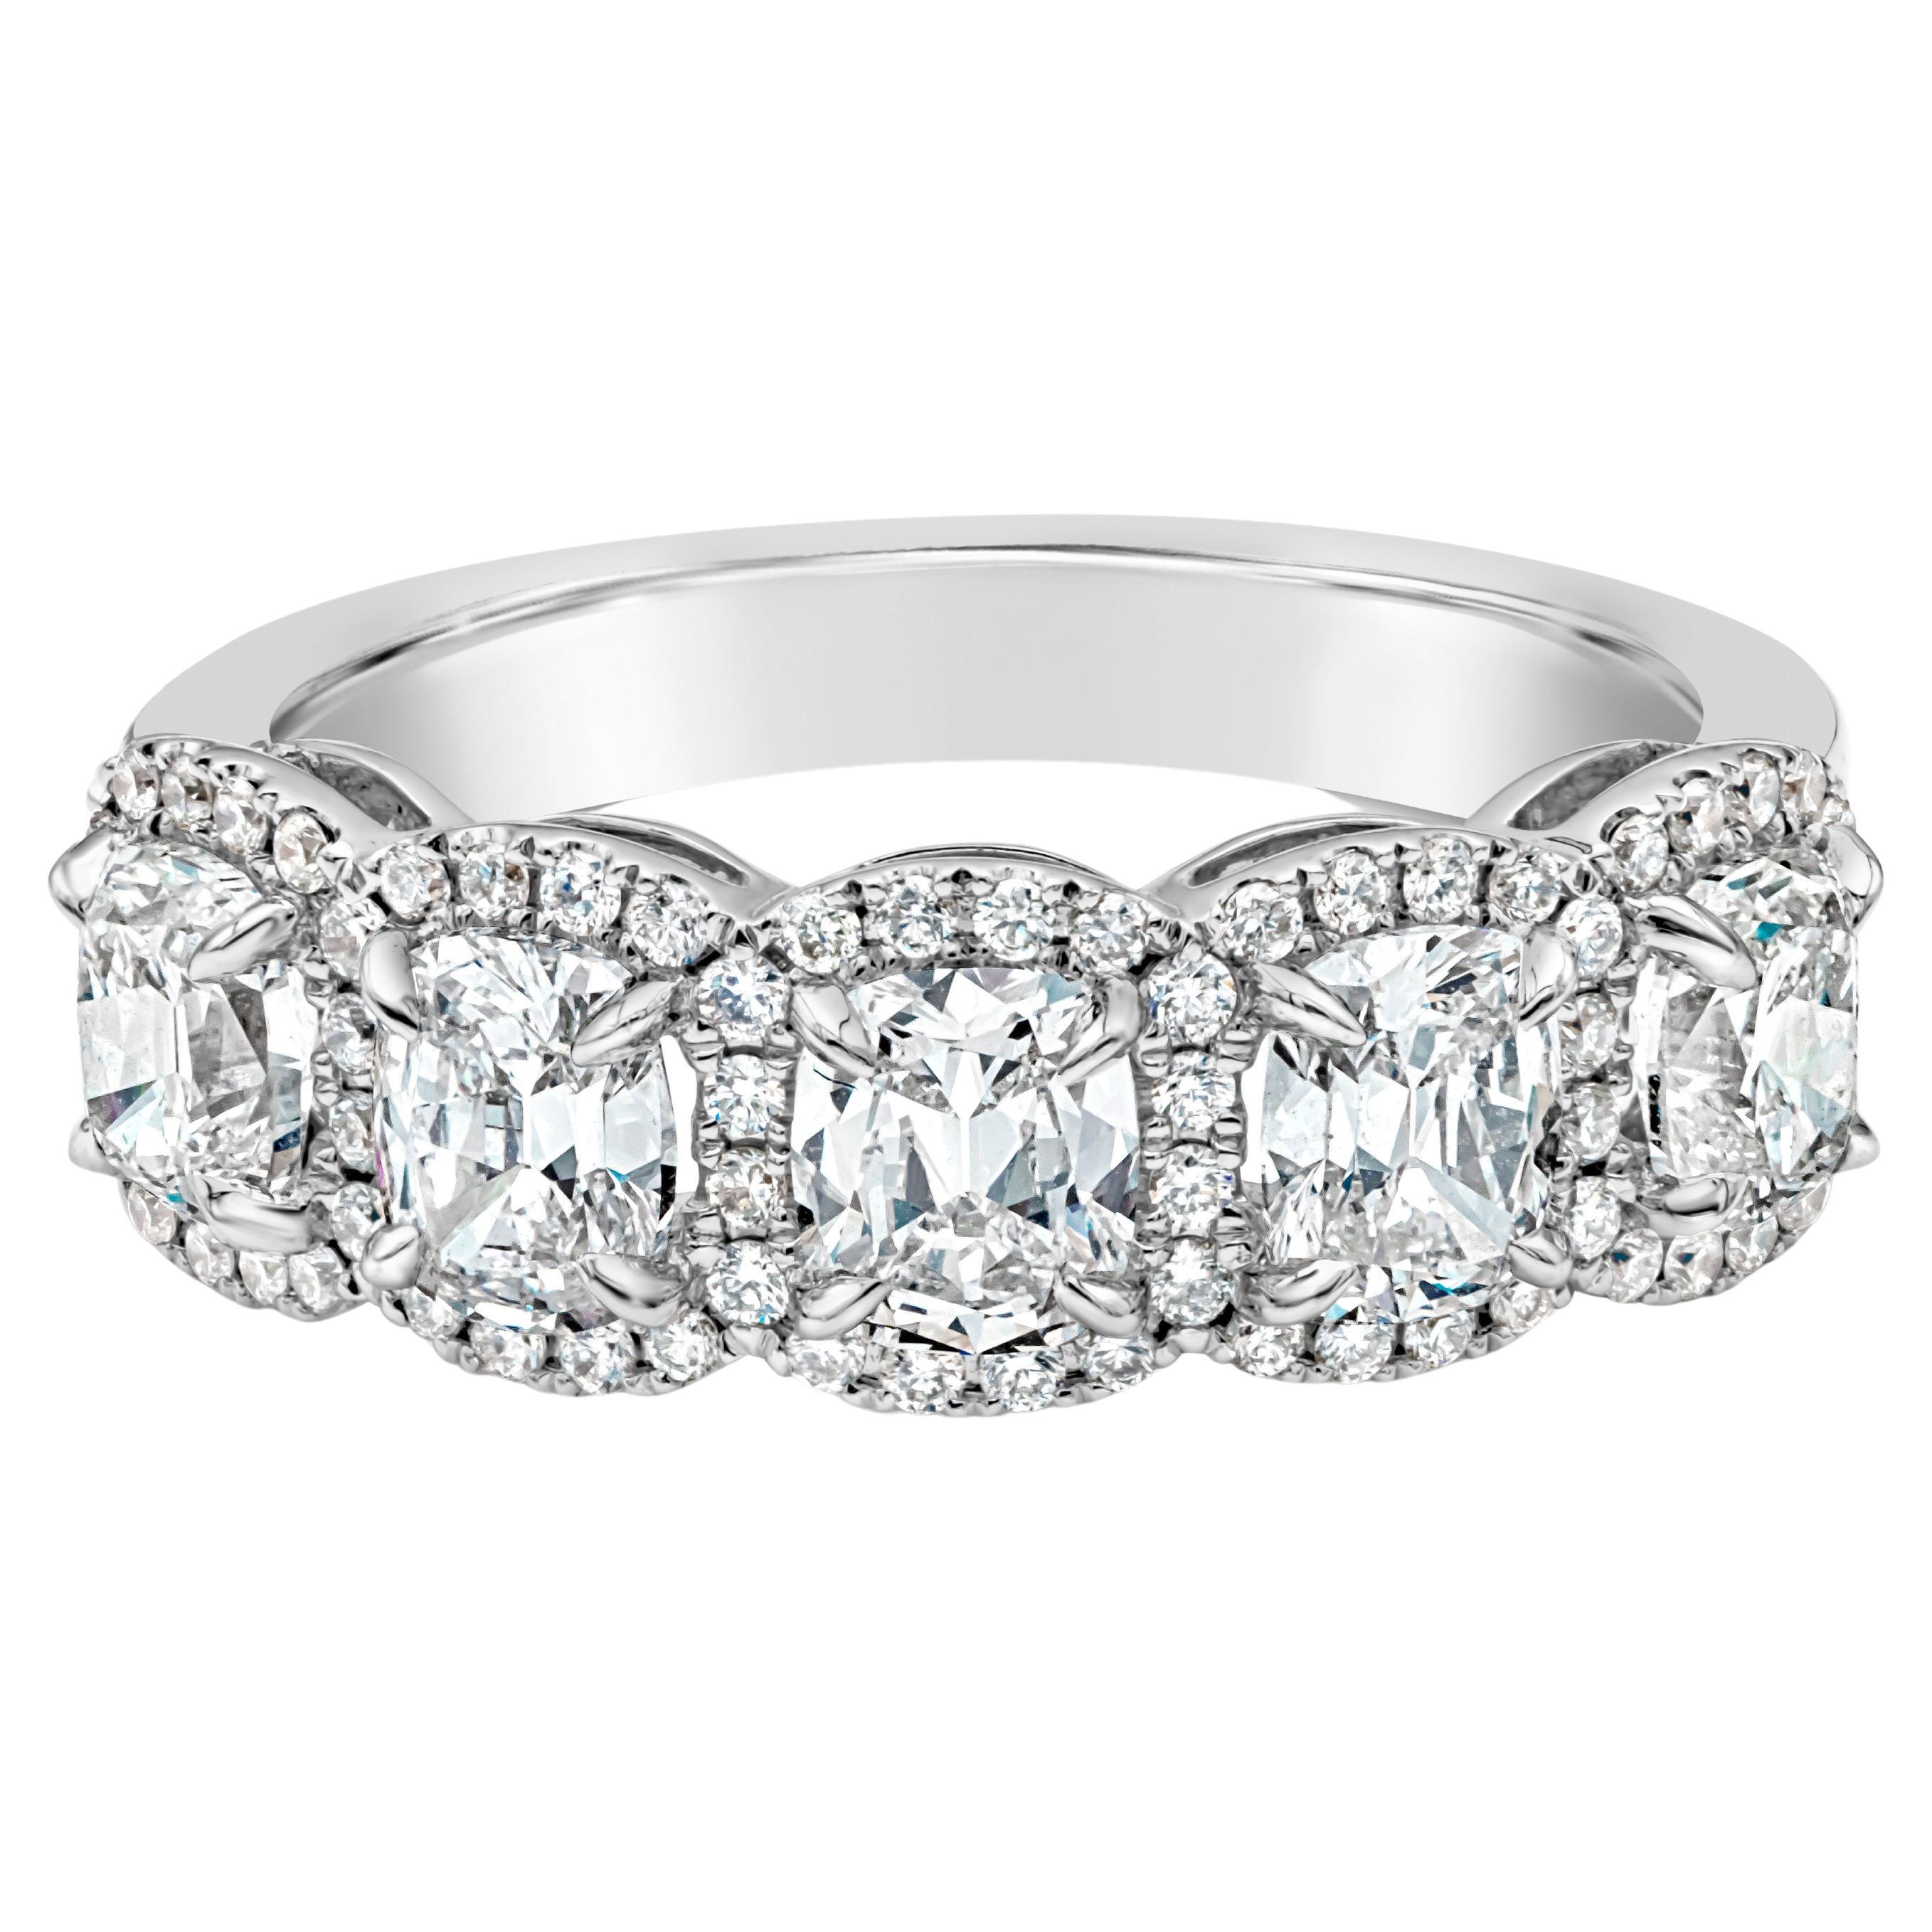 Roman Malakov 1.78 Carat Total Cushion Cut Diamond Five-Stone Wedding Band Ring